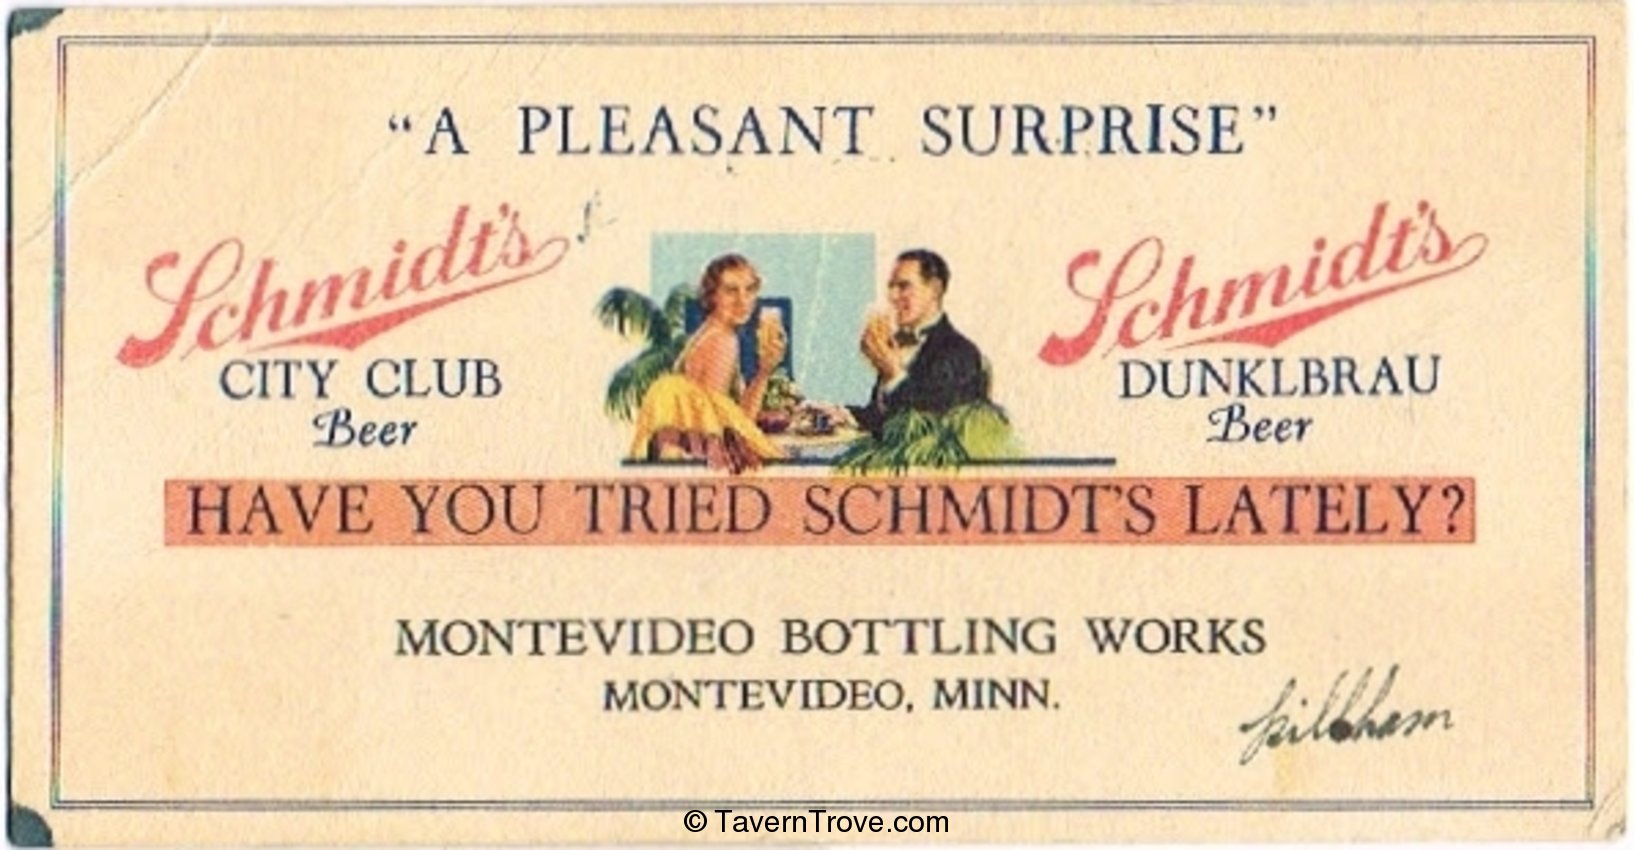 Schmidt's City Club Beer/Dunkelbrau Beer